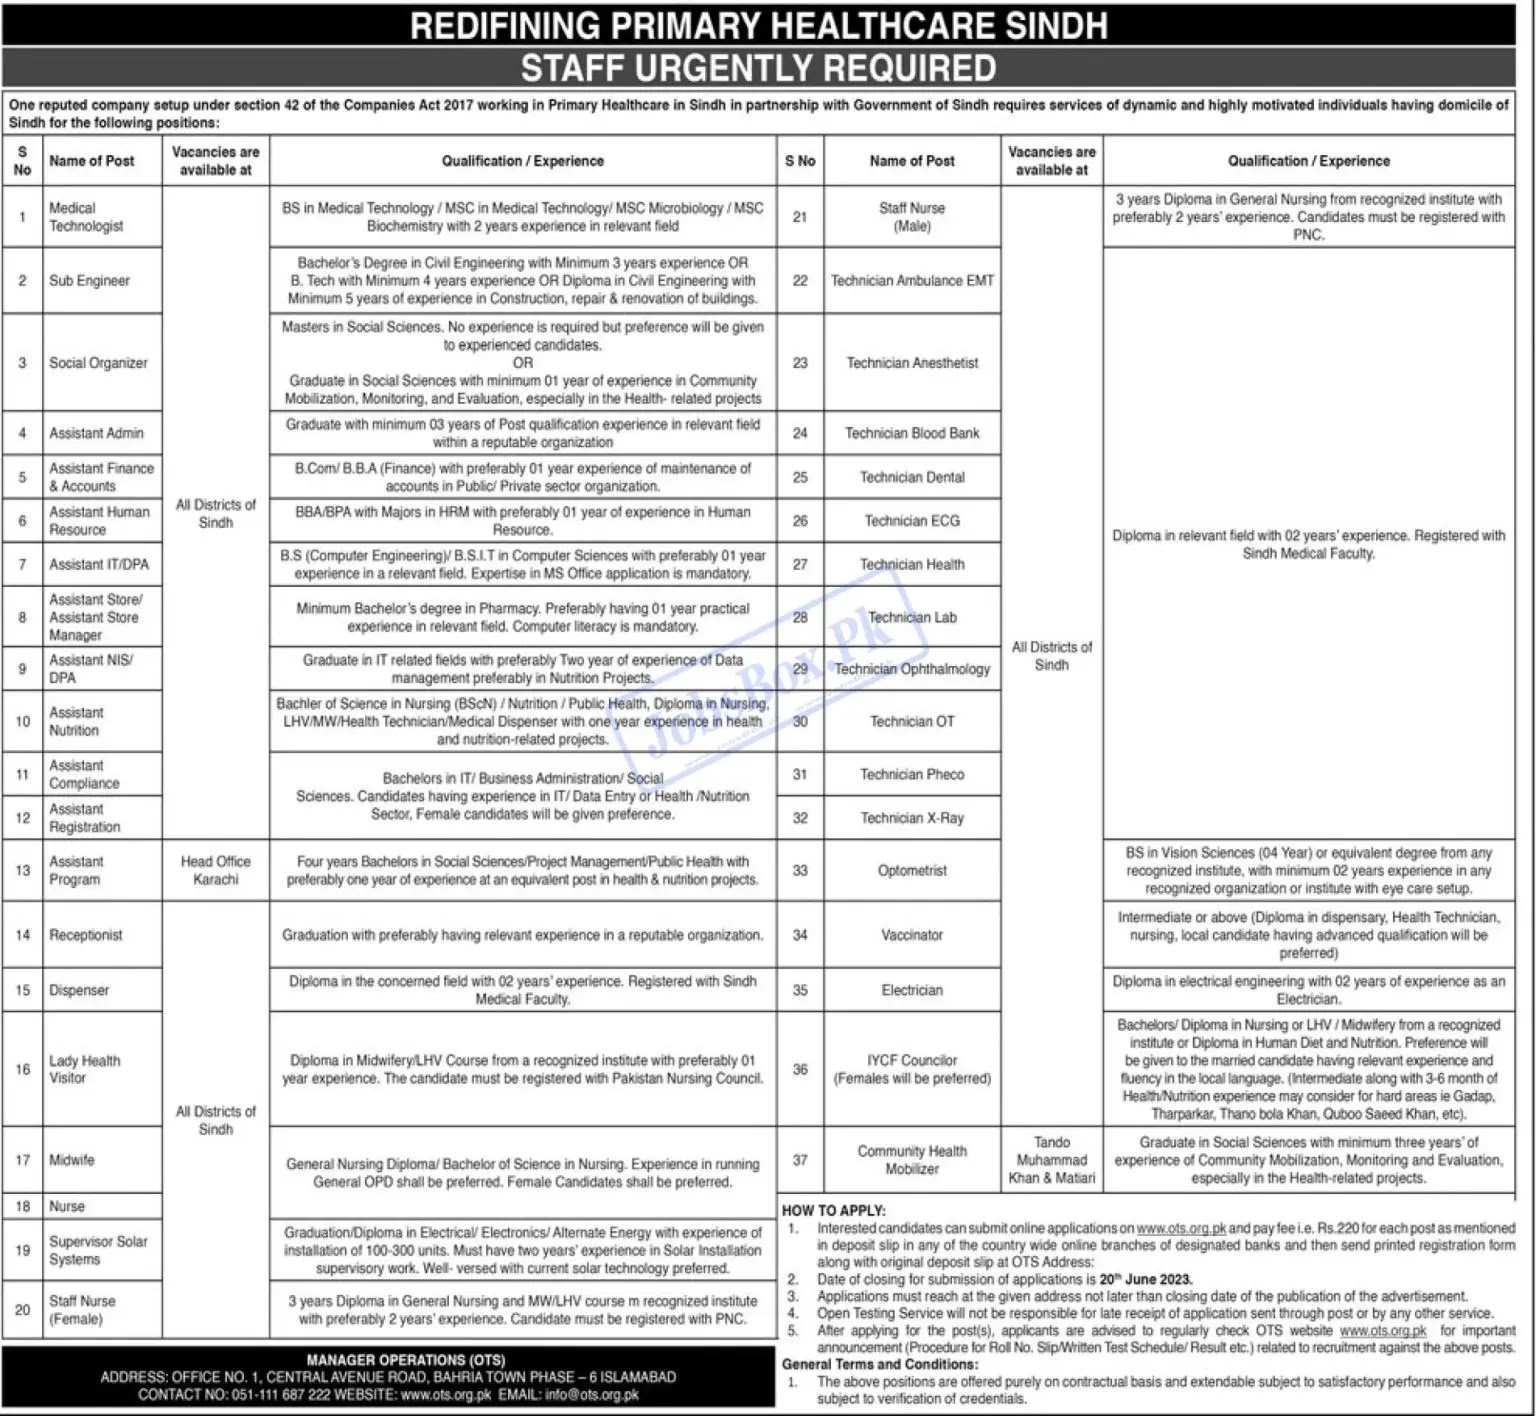 People Primary Health Initiative PPHI Sindh Jobs 2023 - Advertisement